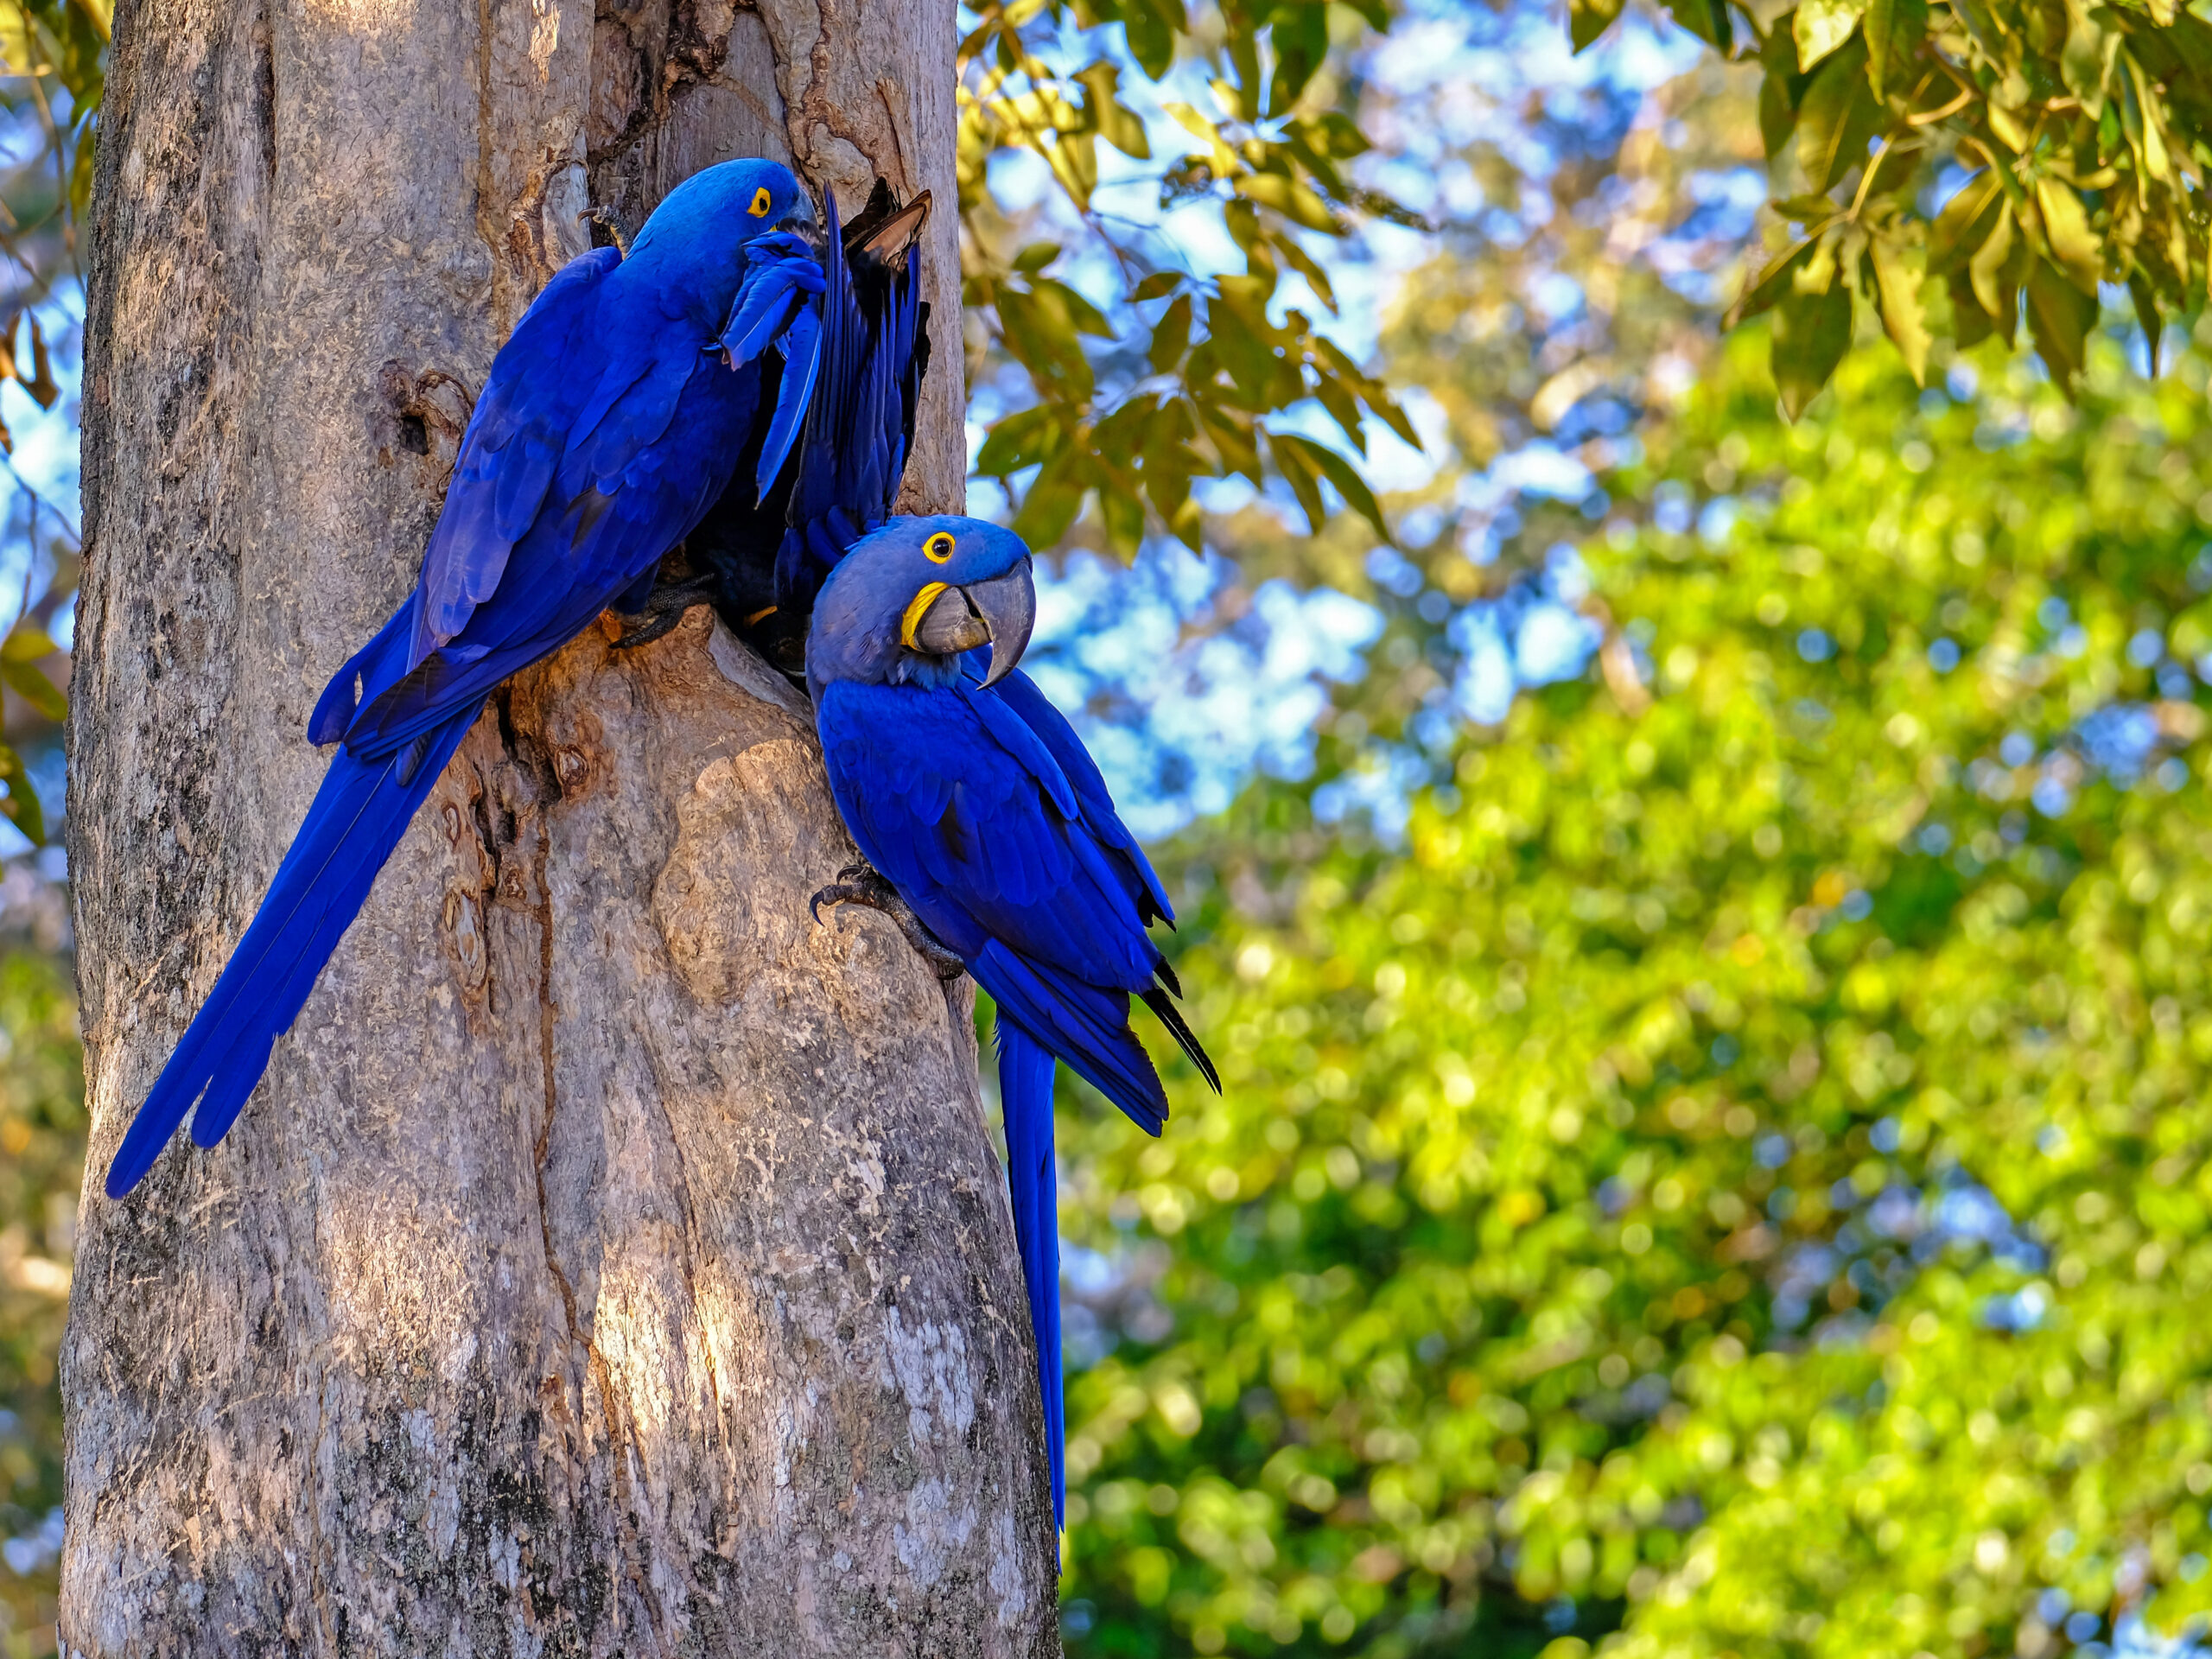 Hyacinth macaws from the Pantanal